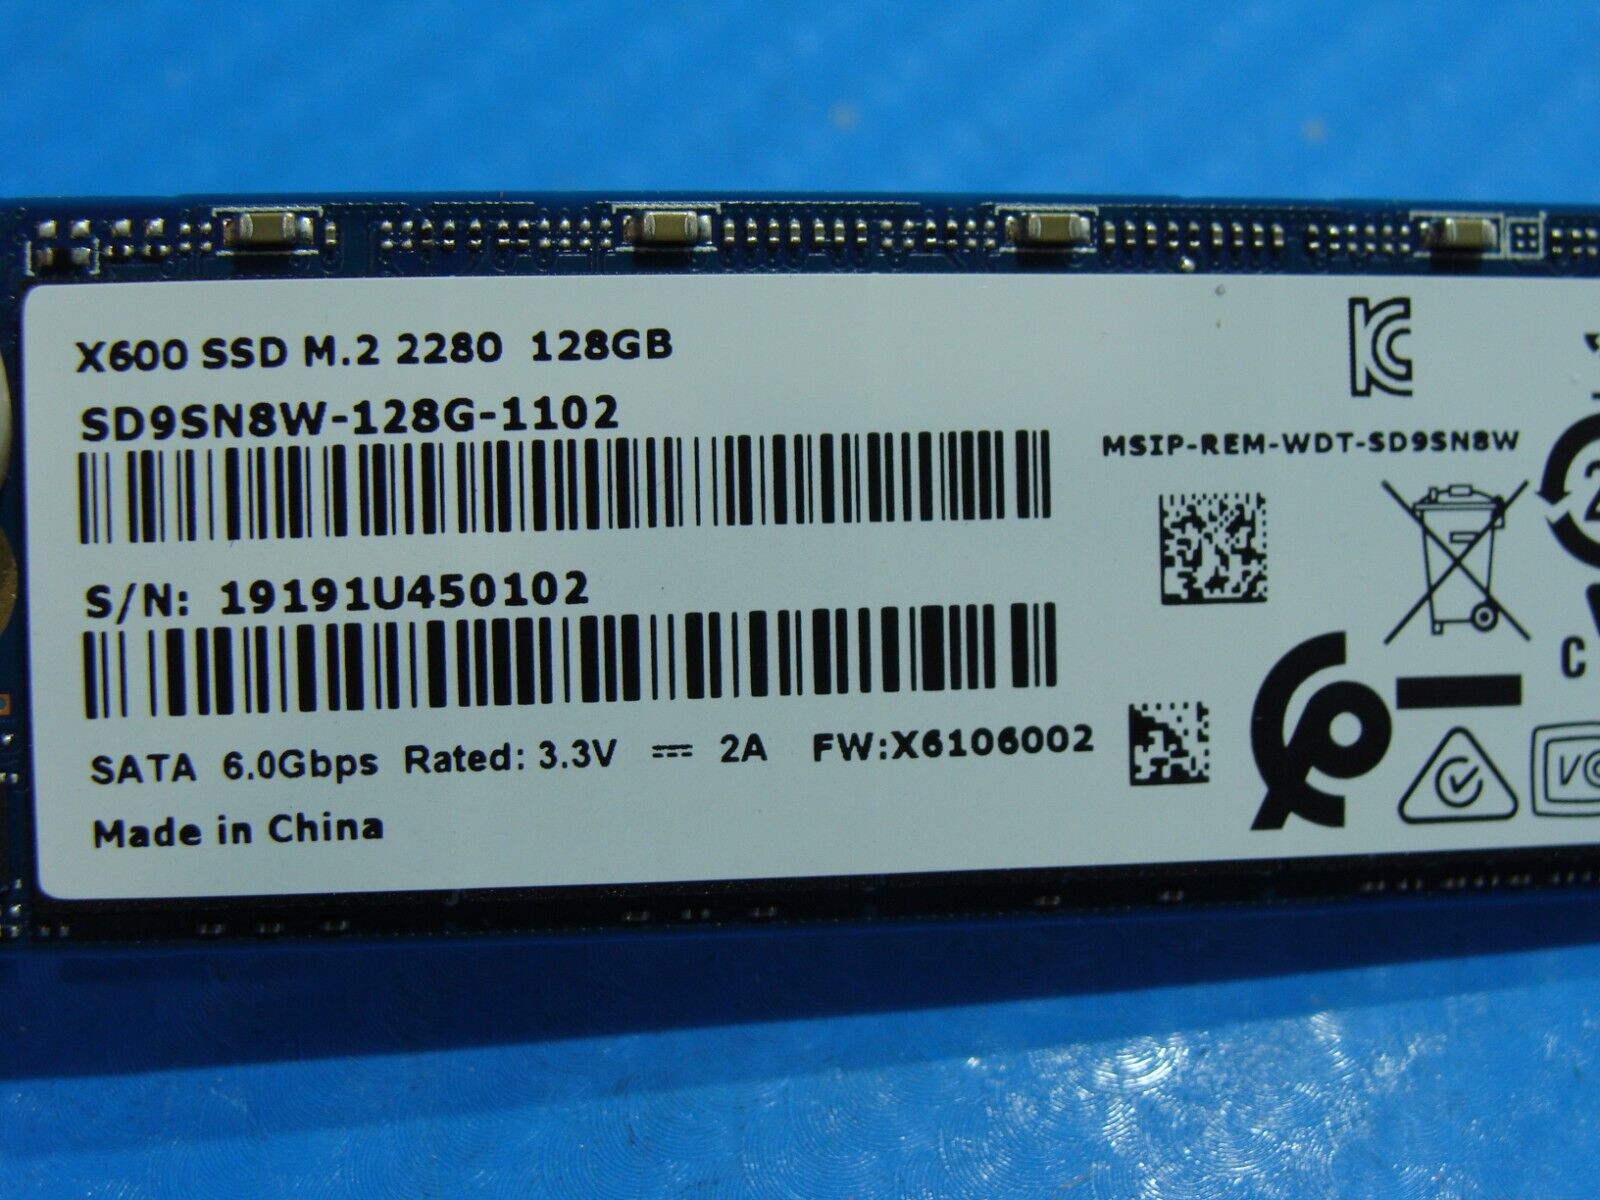 Asus F510QA-WB91 SanDisk 128GB SATA M.2 SSD Solid State Drive SD9SN8W-128G-1102